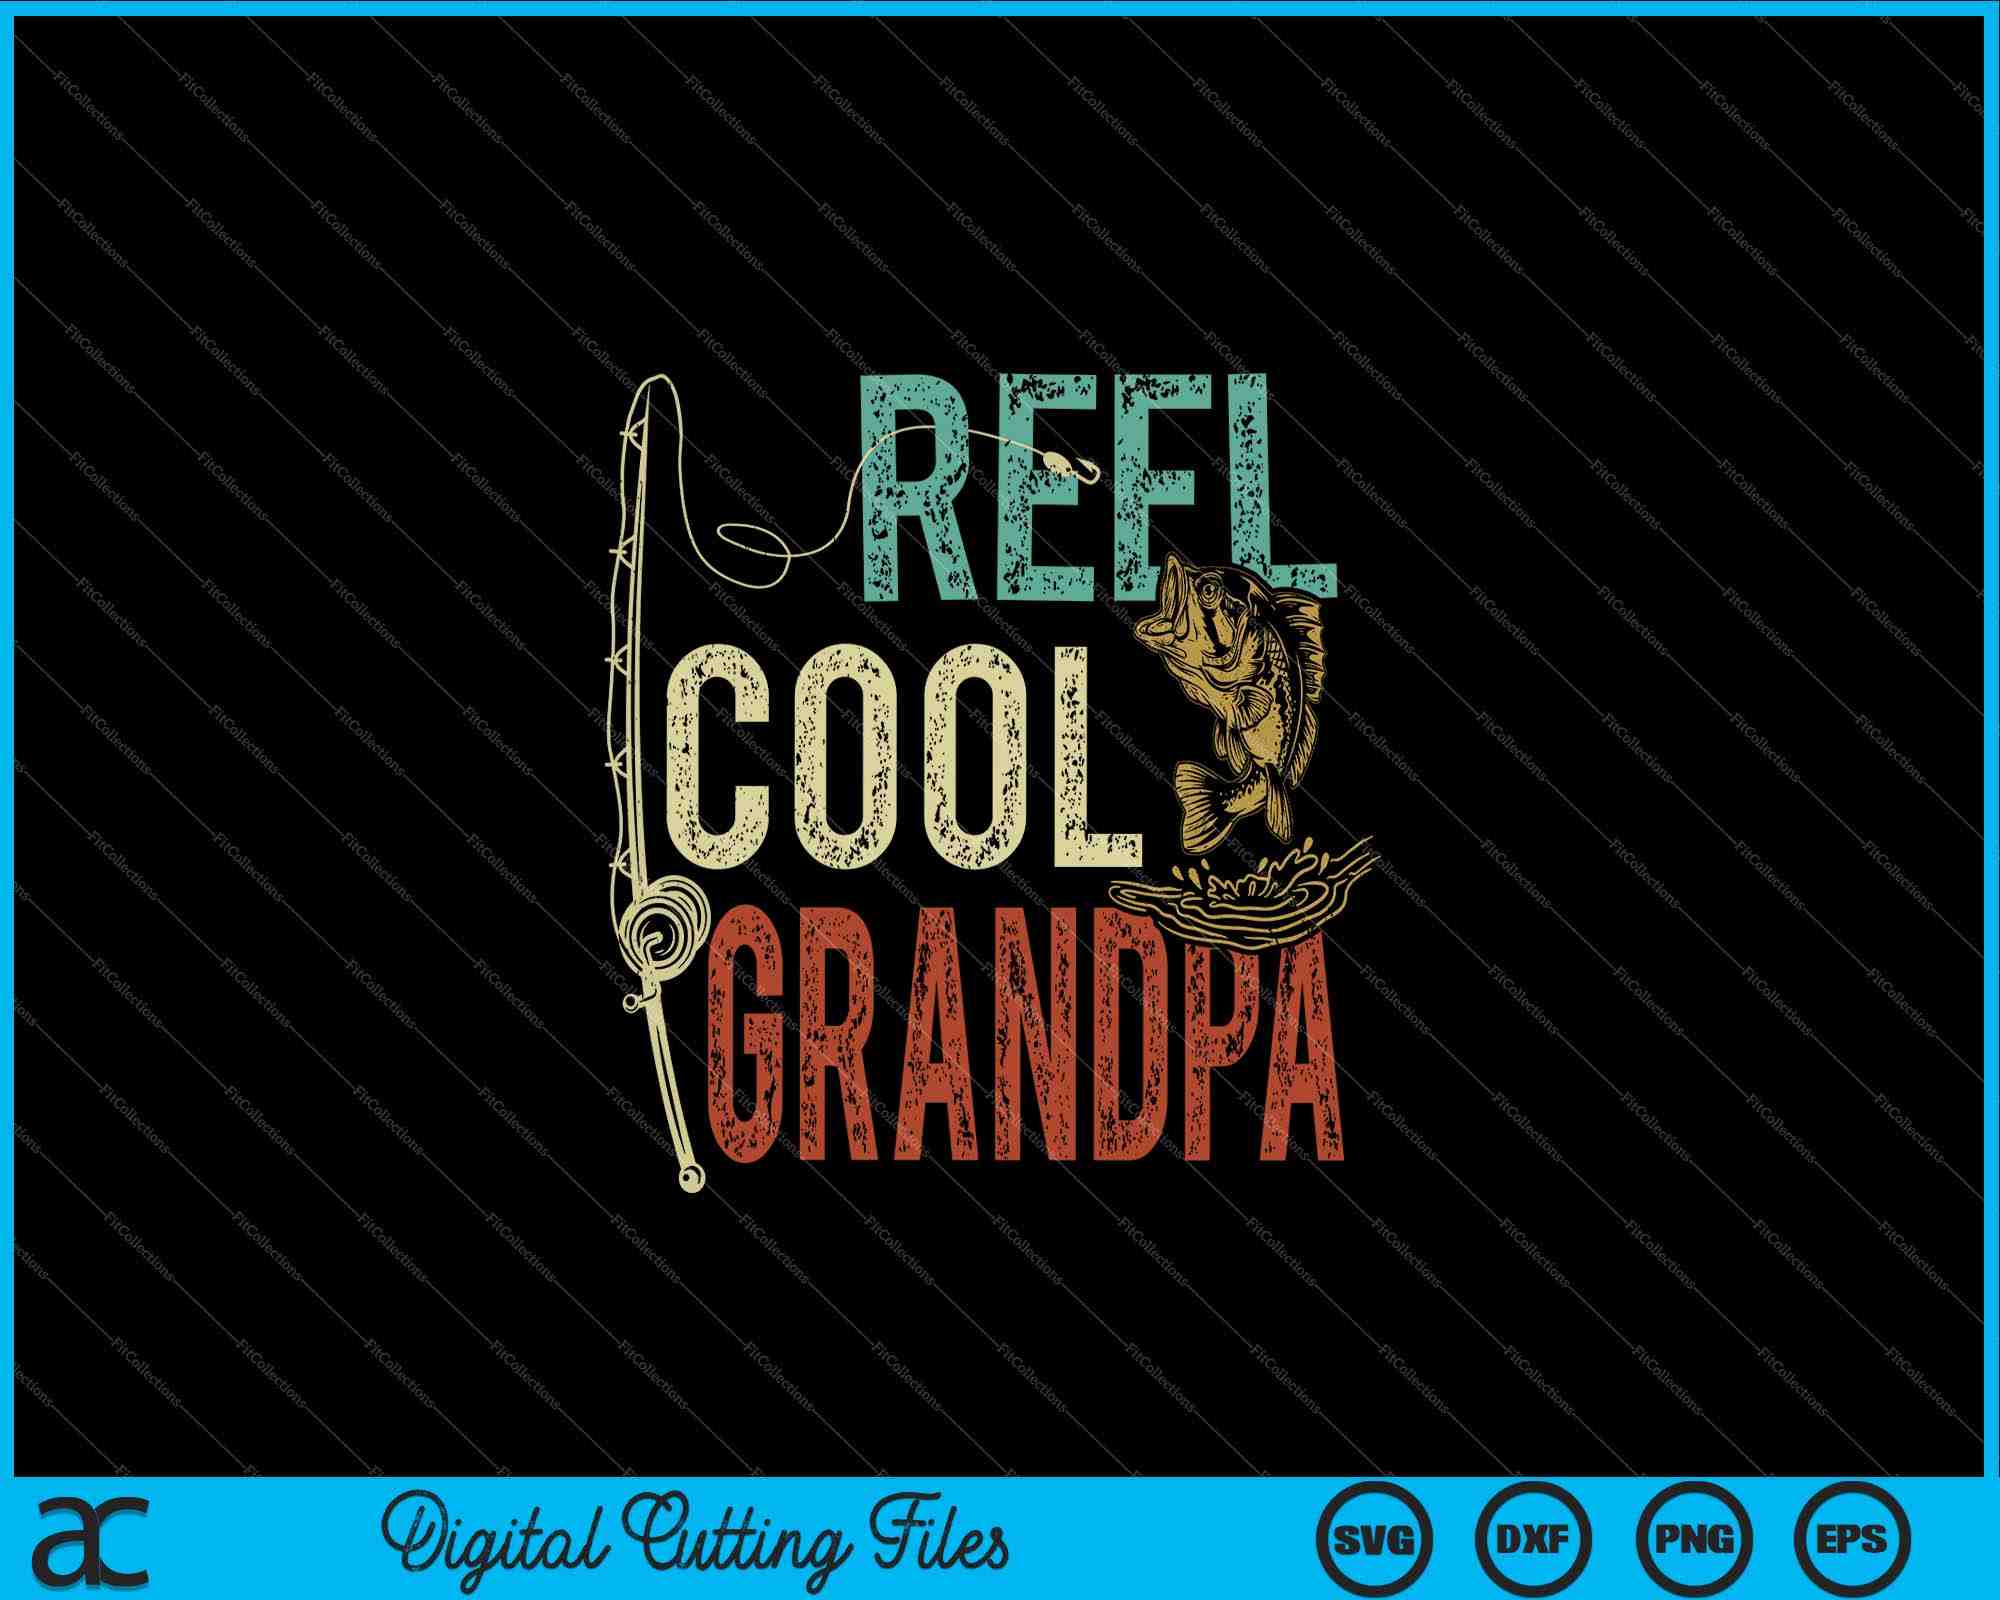 Fishing Grandpa Shirt Reel Cool Grandpa t-shirt